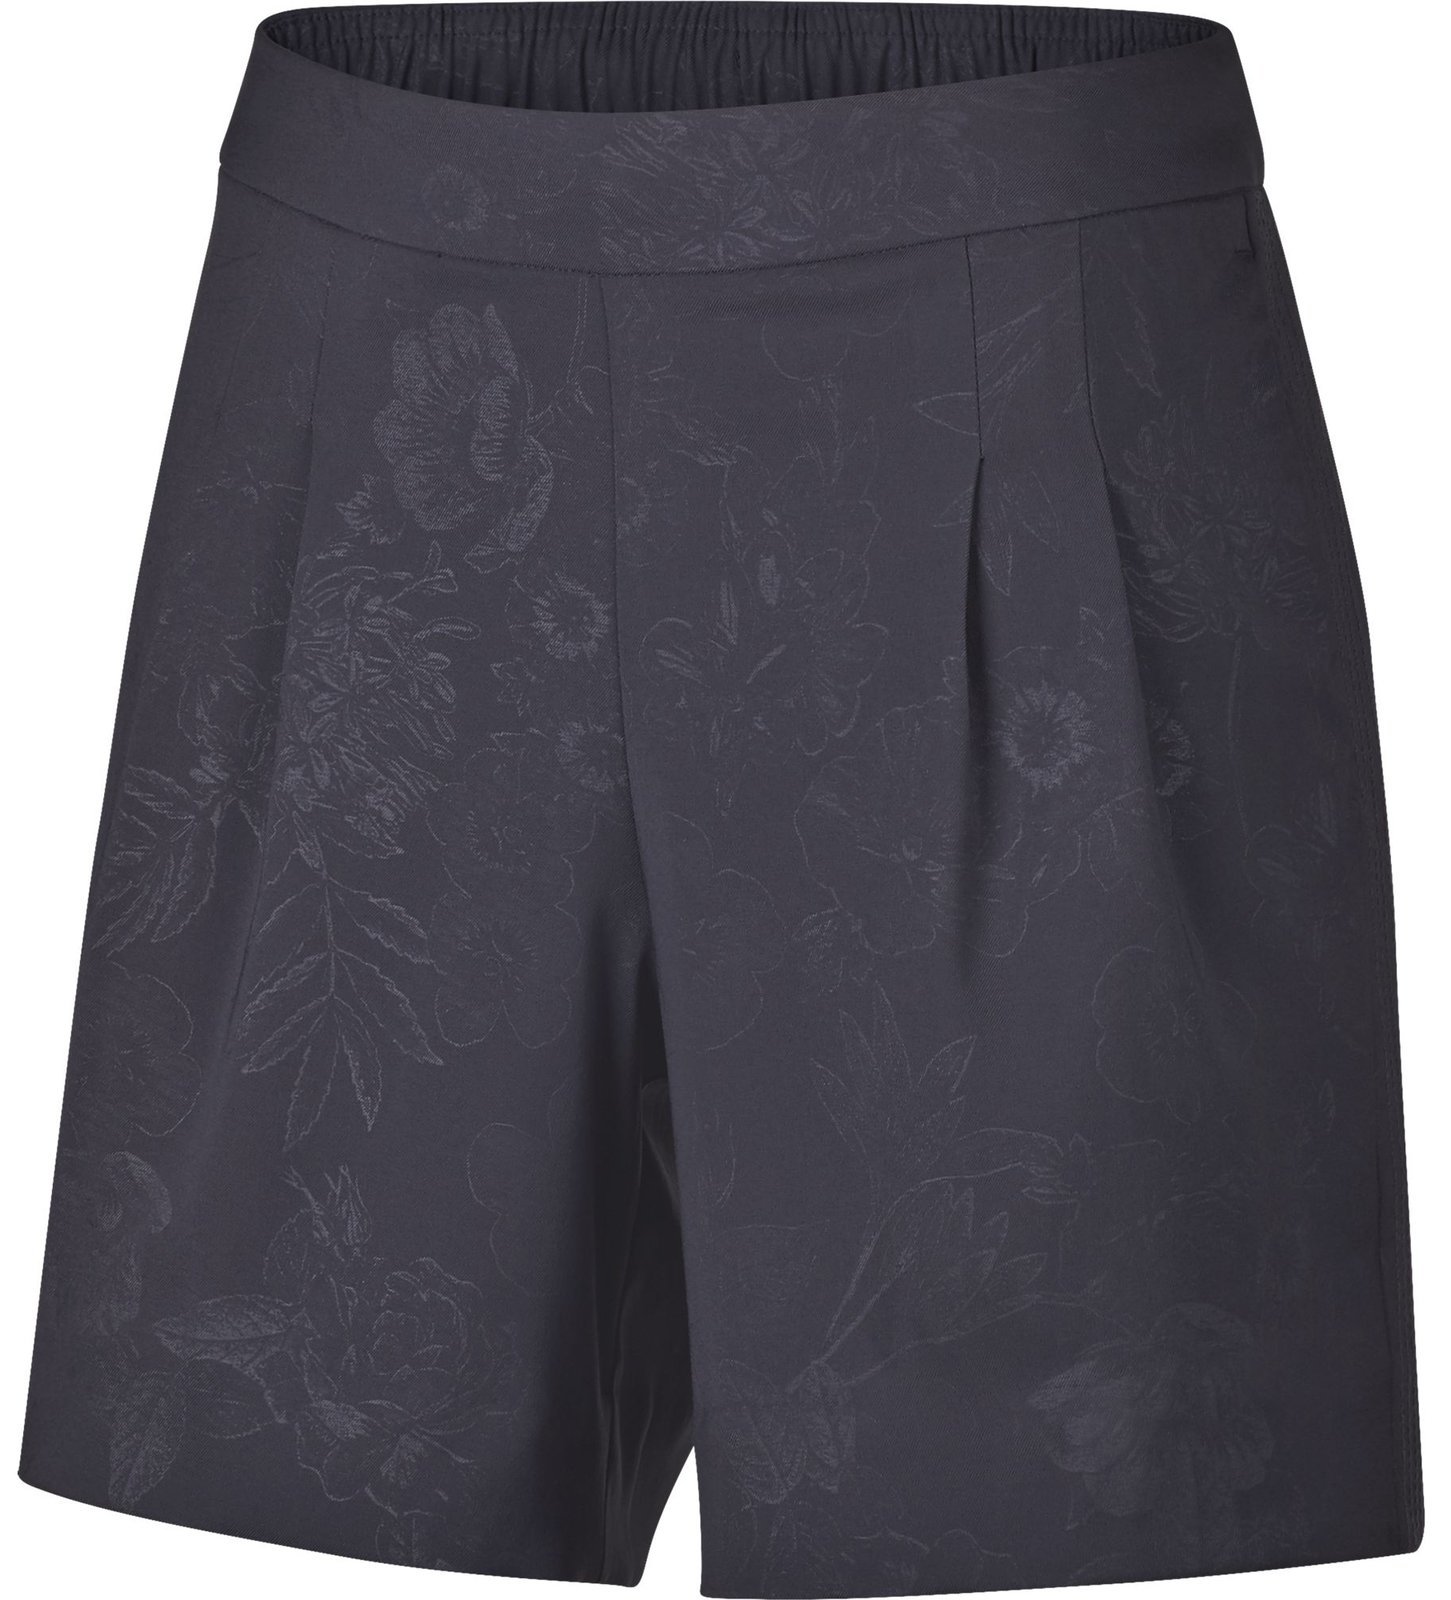 Pantalones cortos Nike Dri-Fit Floral Embossed Gridiron XS